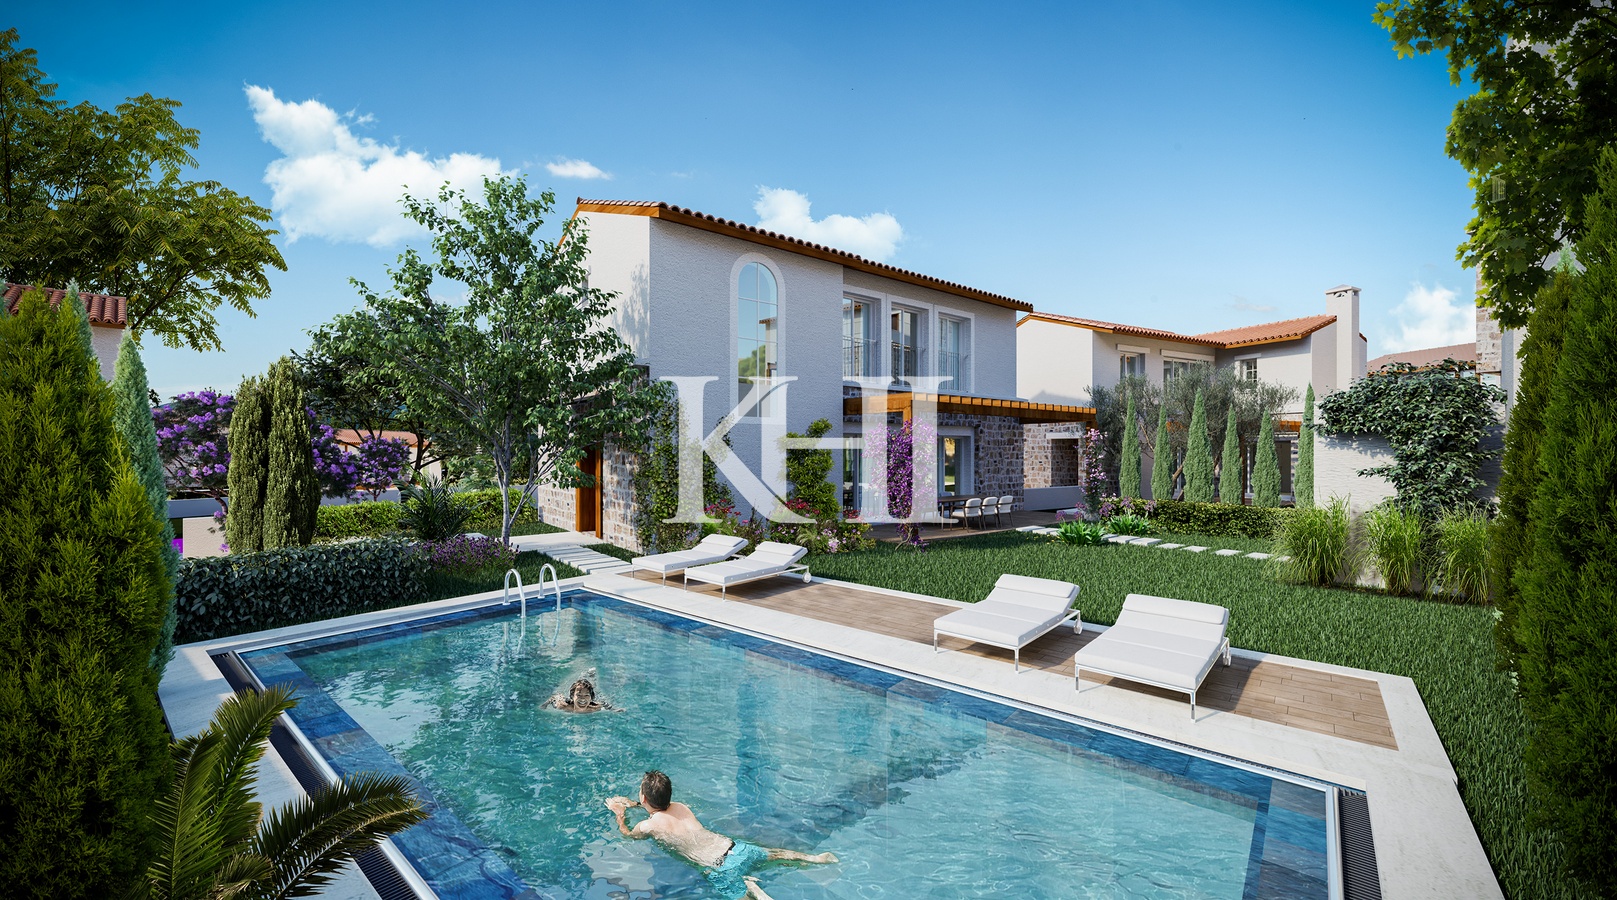 New Villa Project in Bodrum Slide Image 10